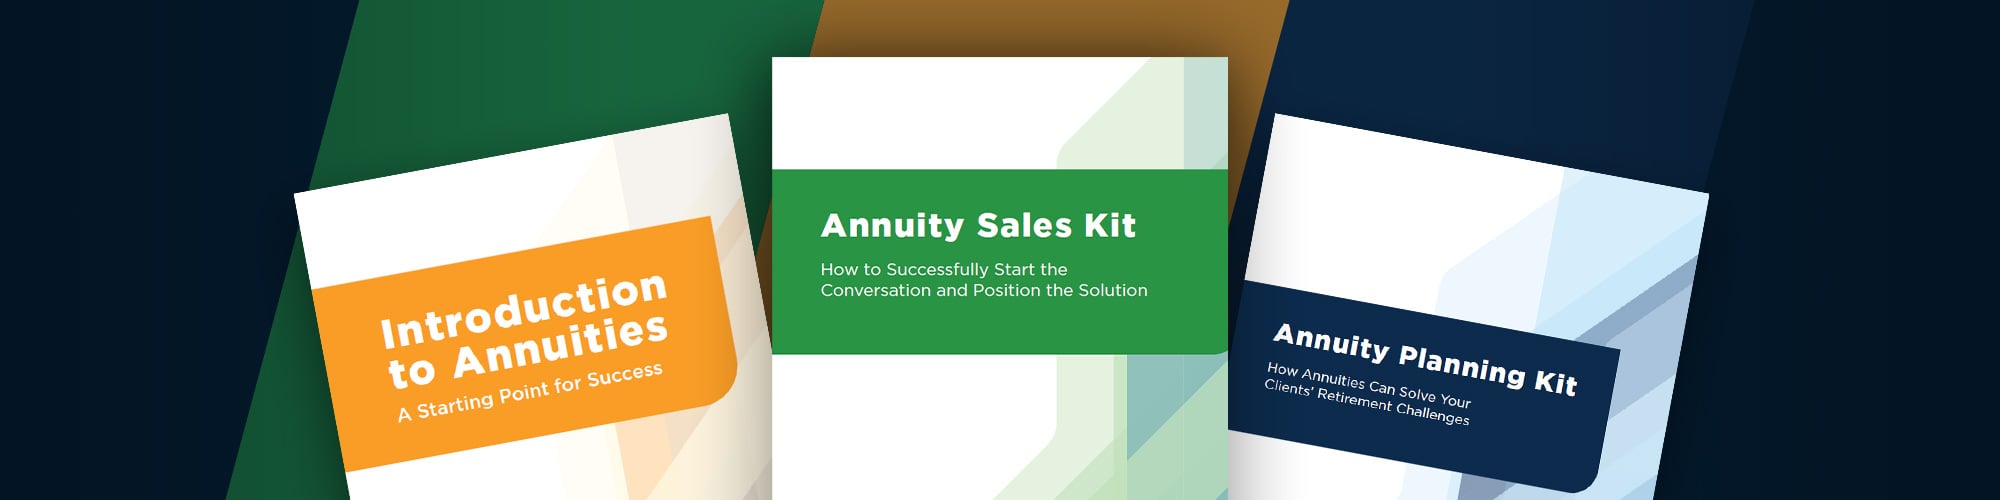 Annuity Sales Kit